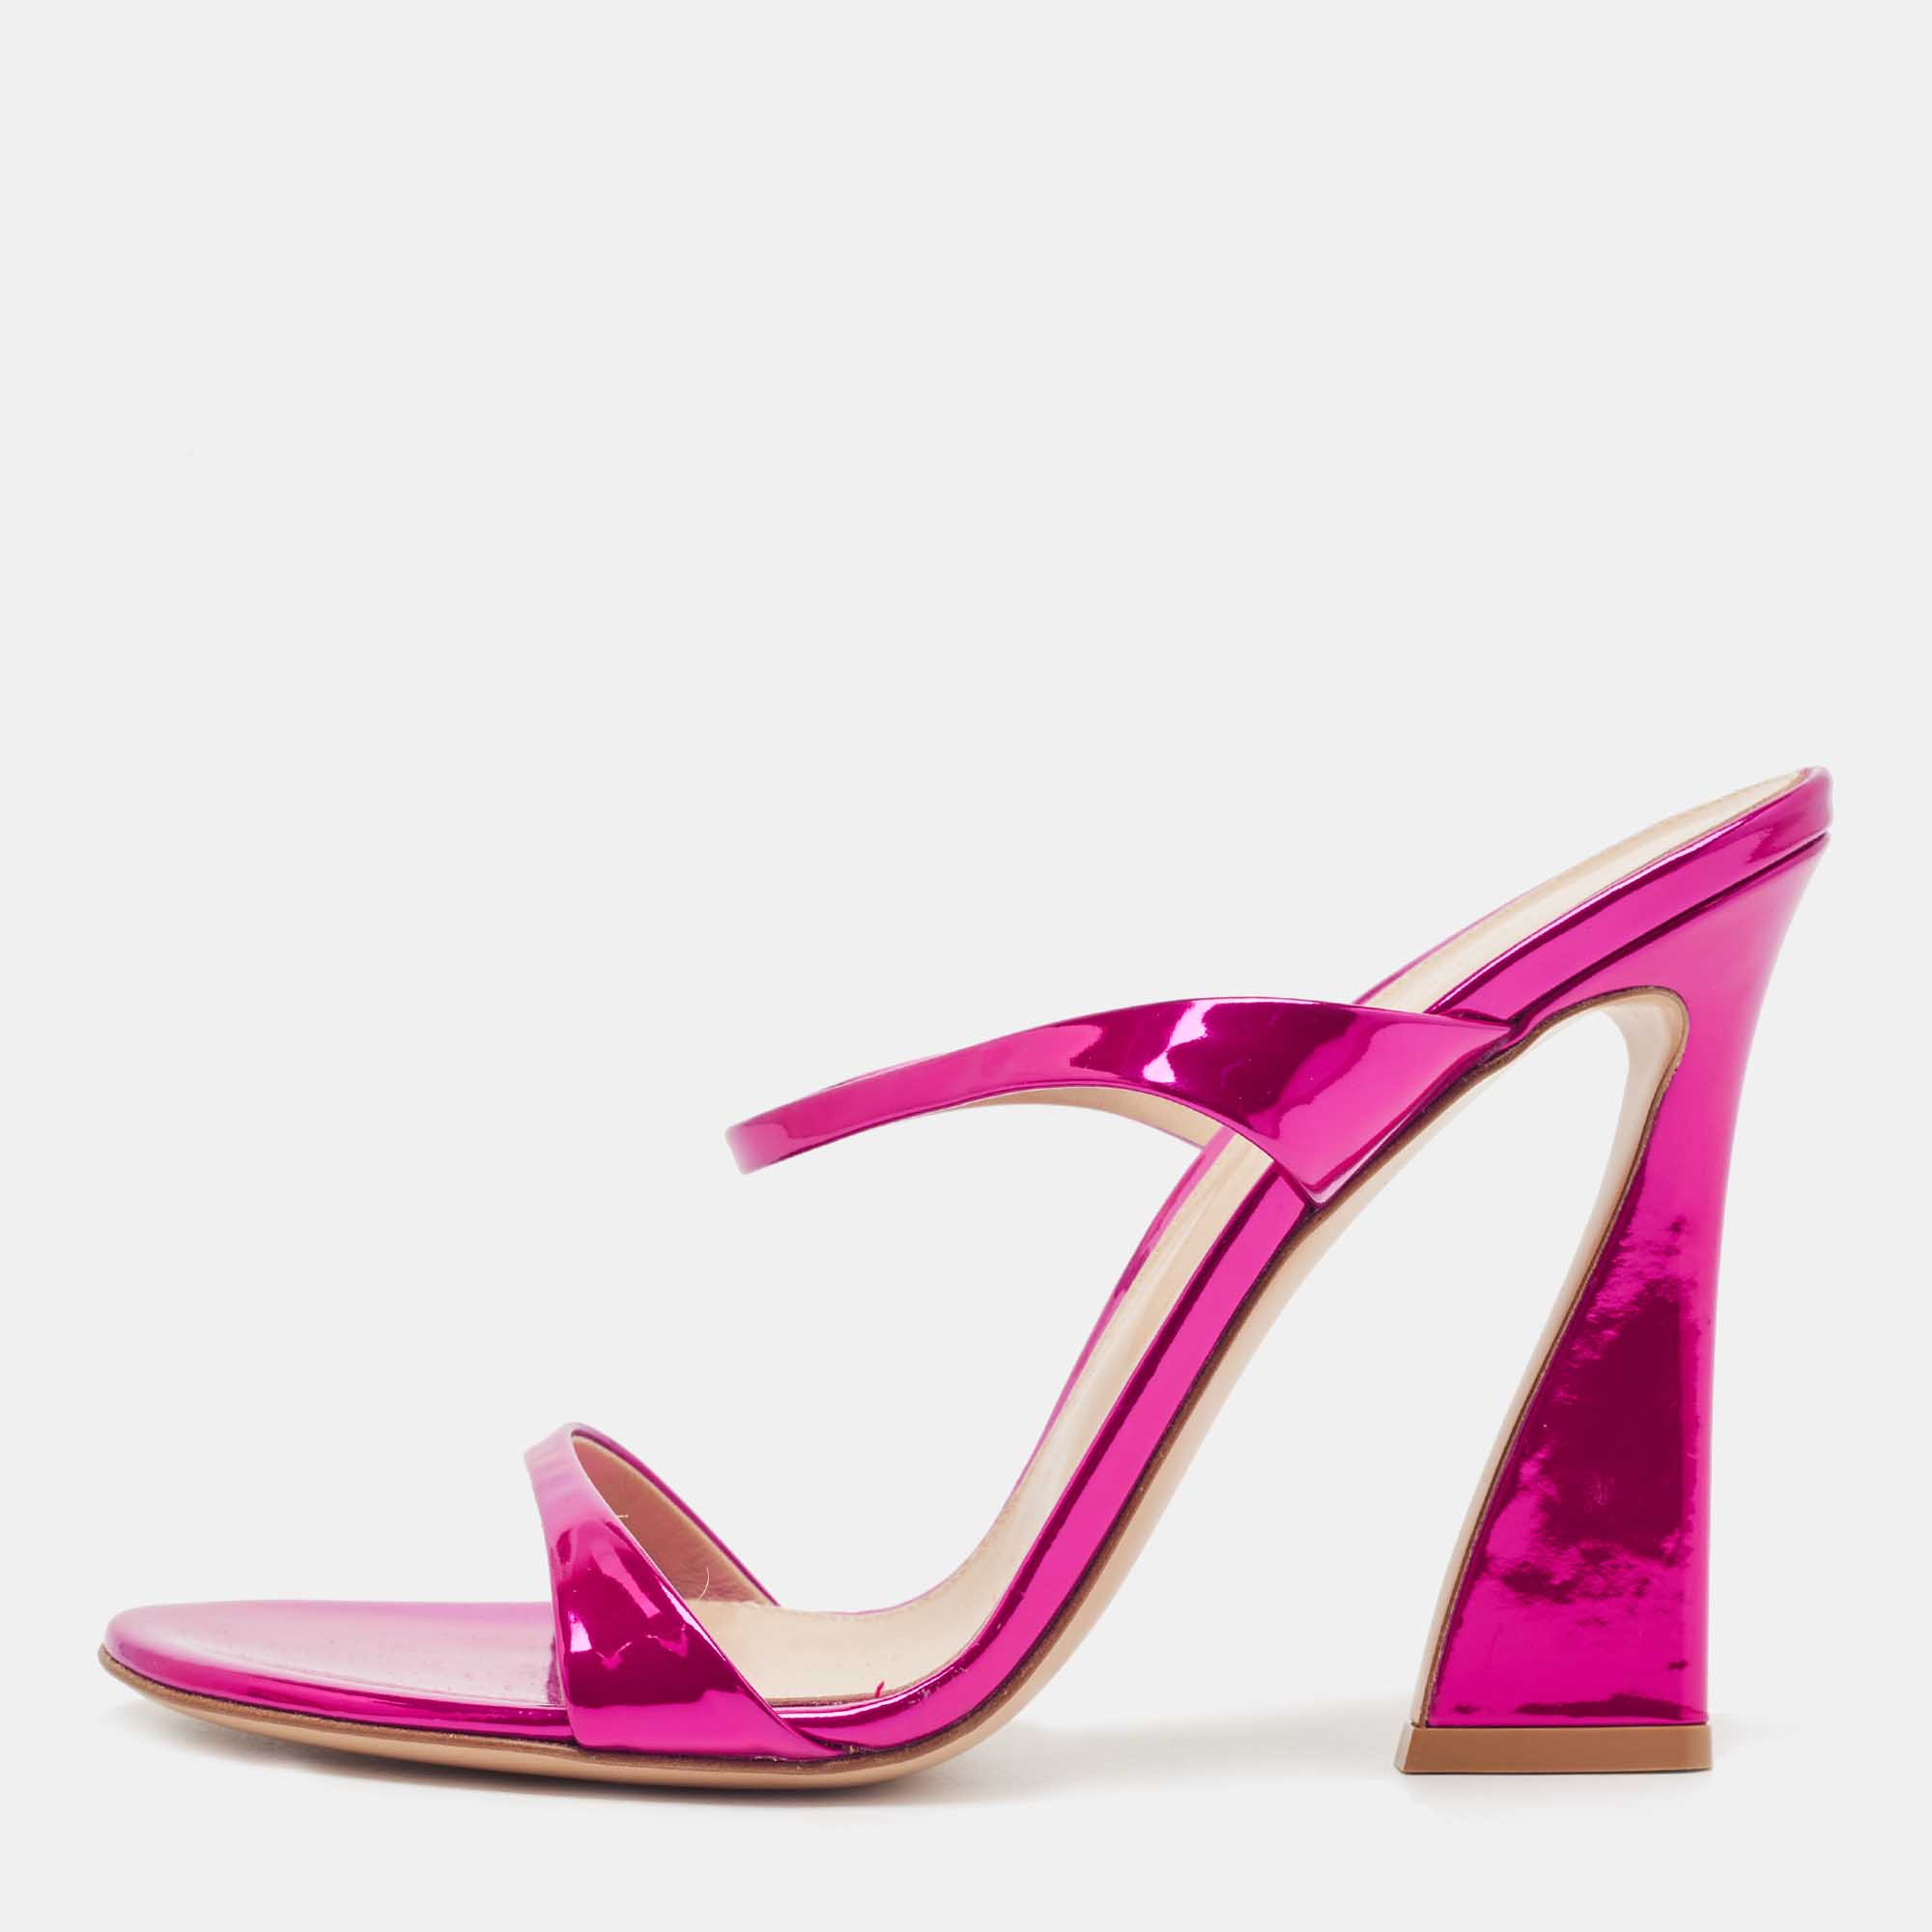 gianvito rossi metallic pink leather aura sandals size 39